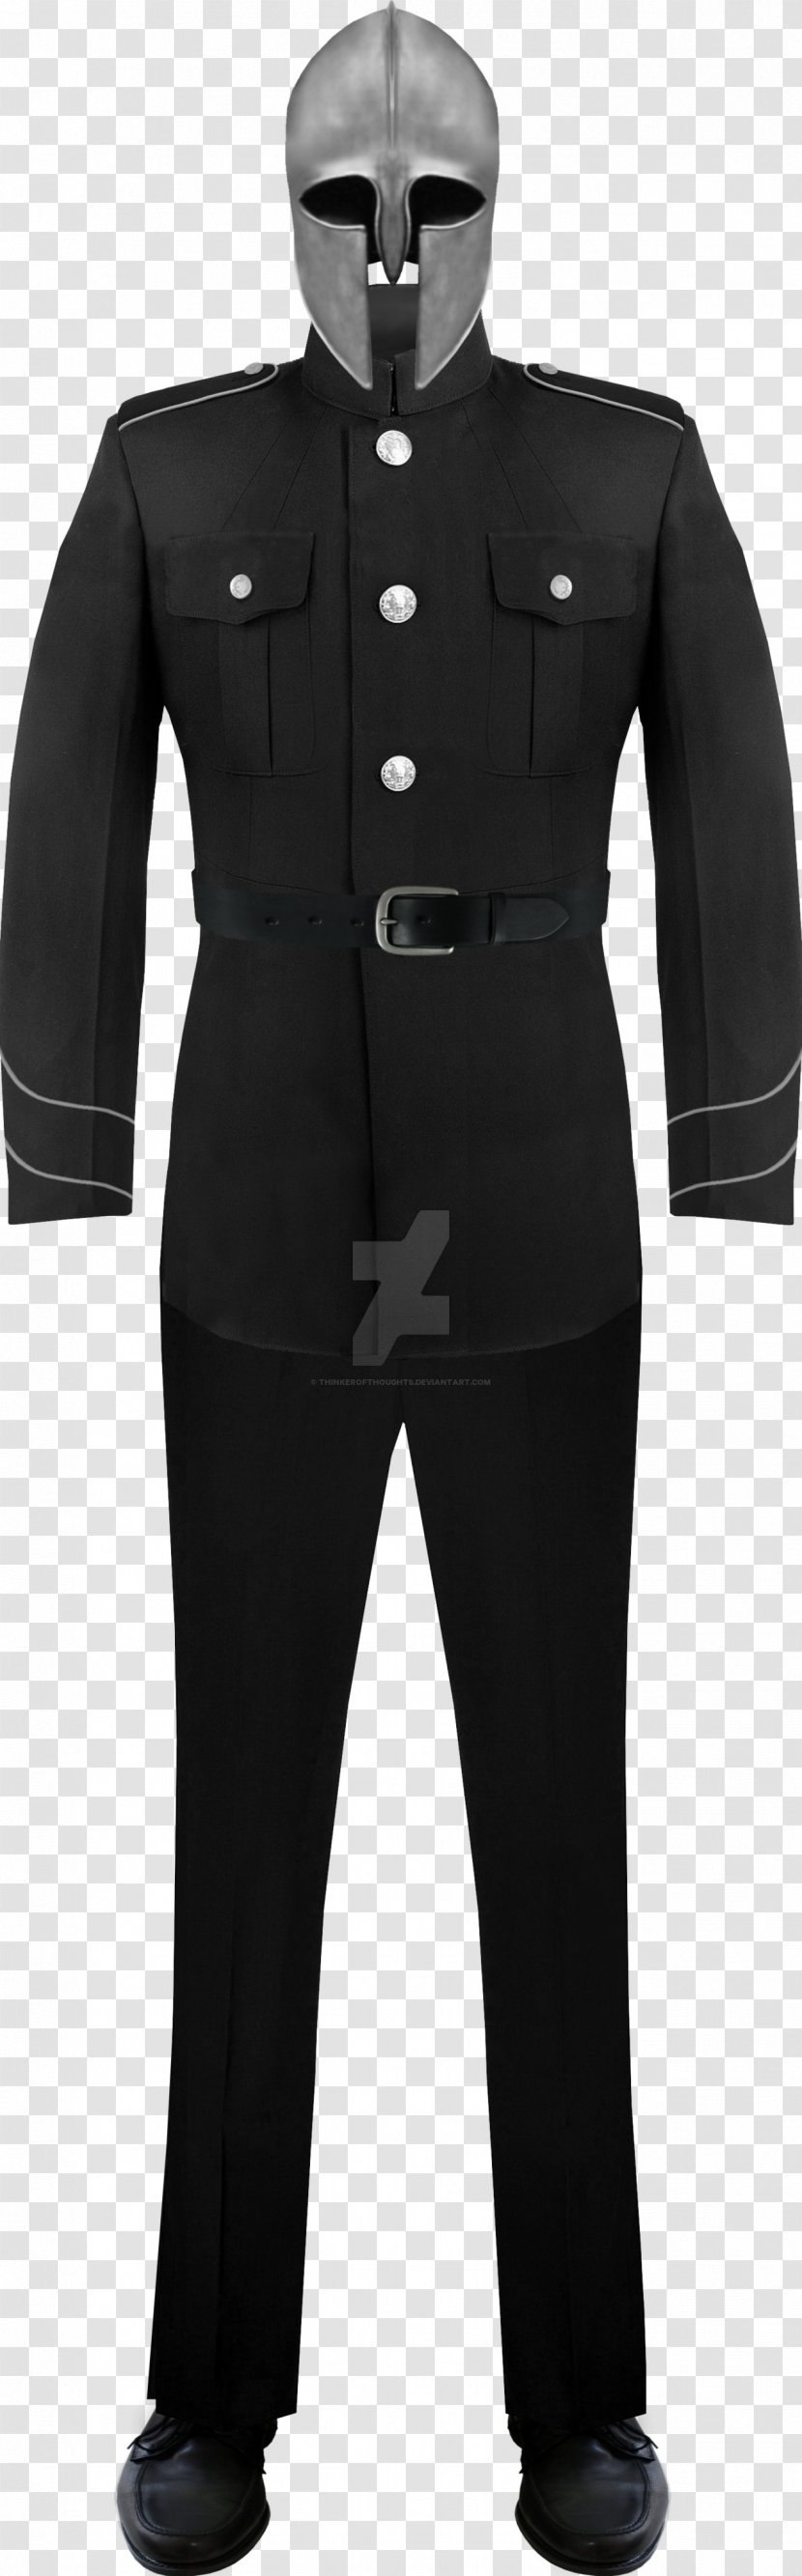 Formal Wear Backpack Uniform Satchel Amazon.com - Stx It20 Risk5rv Nr Eo - Suit Transparent PNG